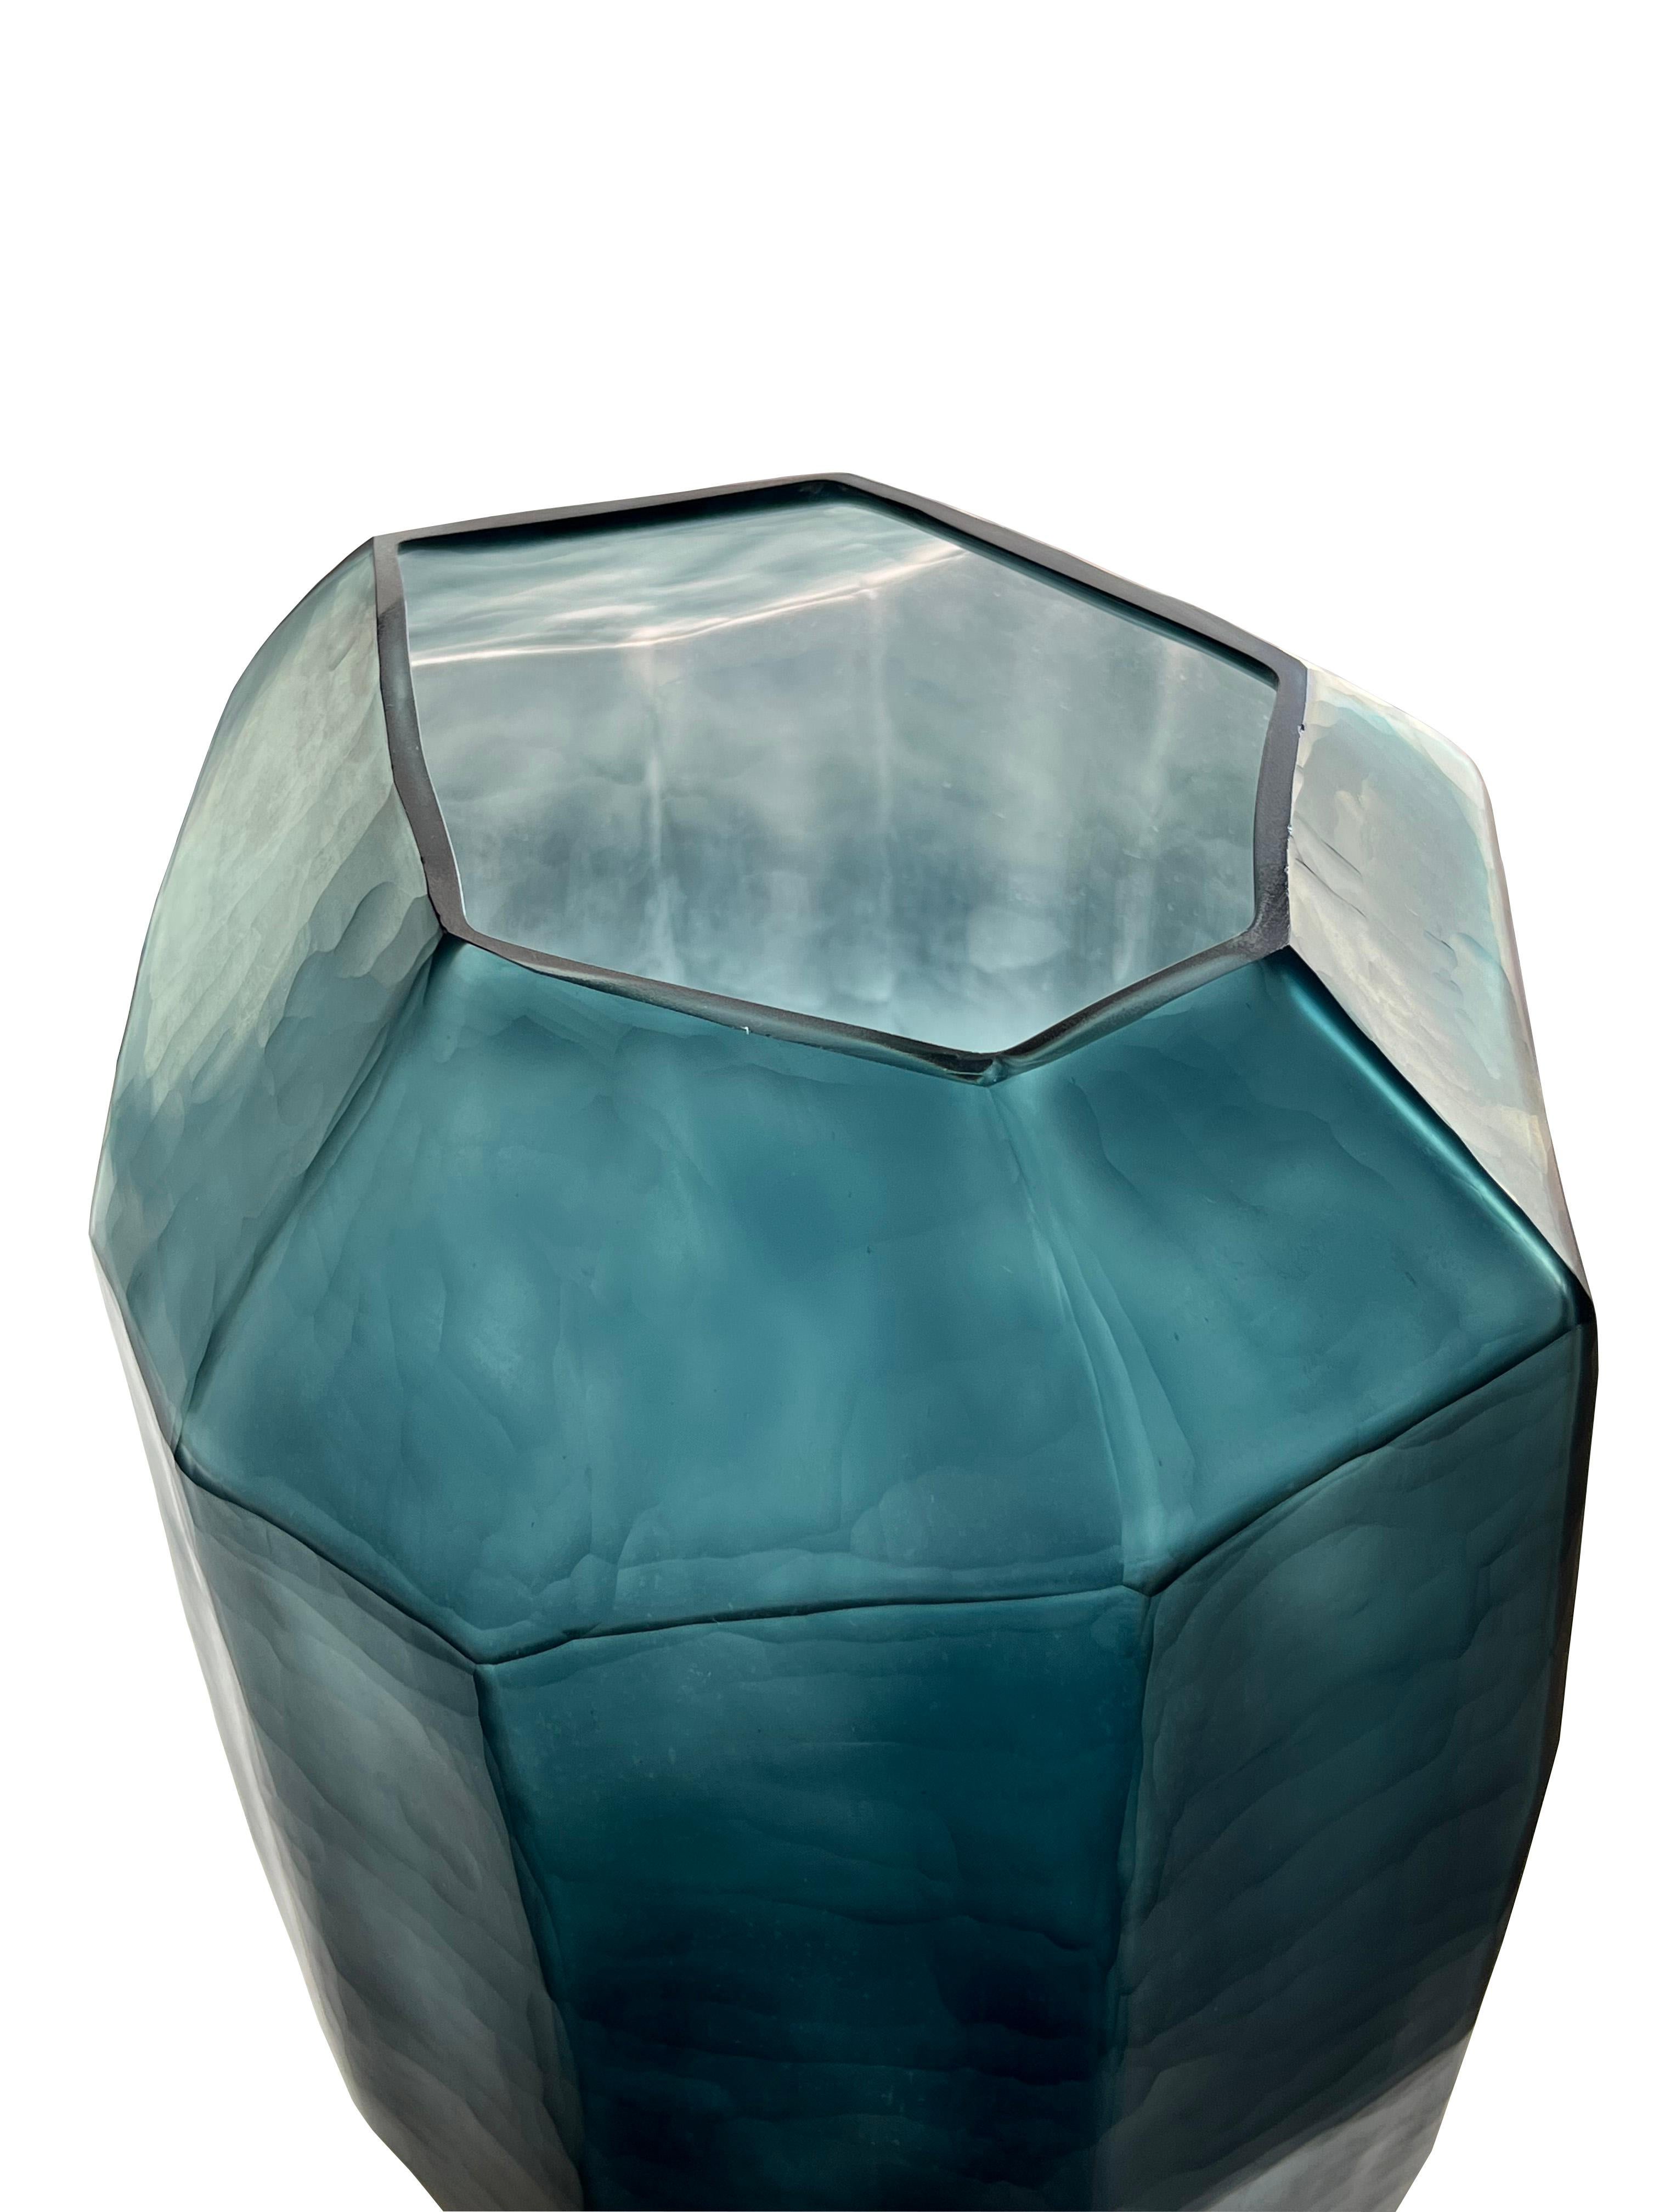 Romanian Deep Blue Tall Glass Vase, Romania, Contemporary